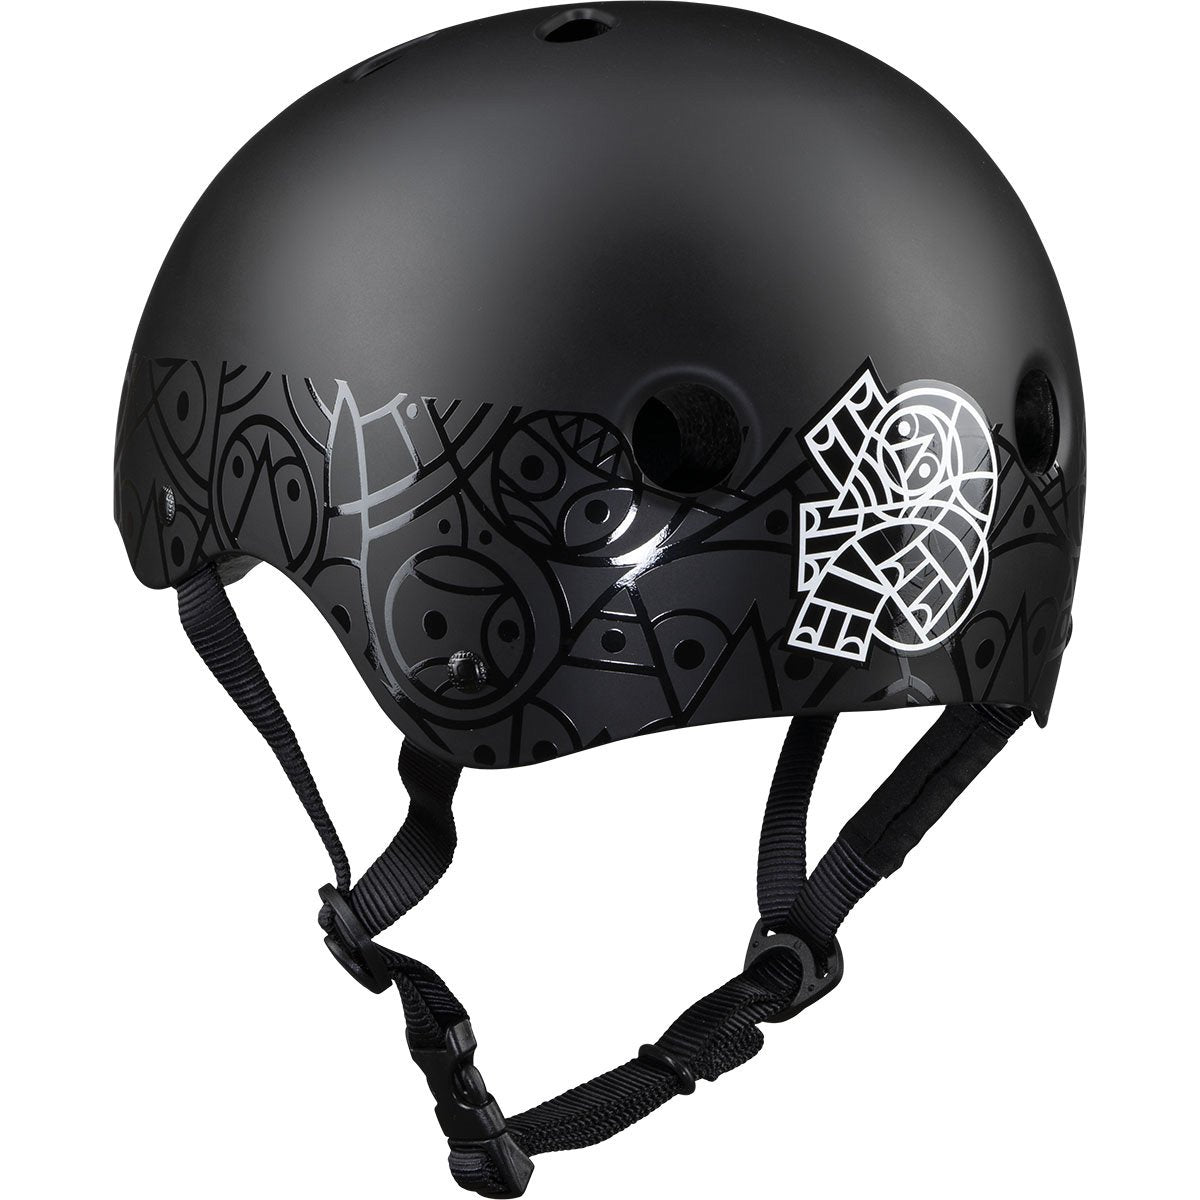 Pro Tec Classic Certified Pendelton Helmet - Black image 2